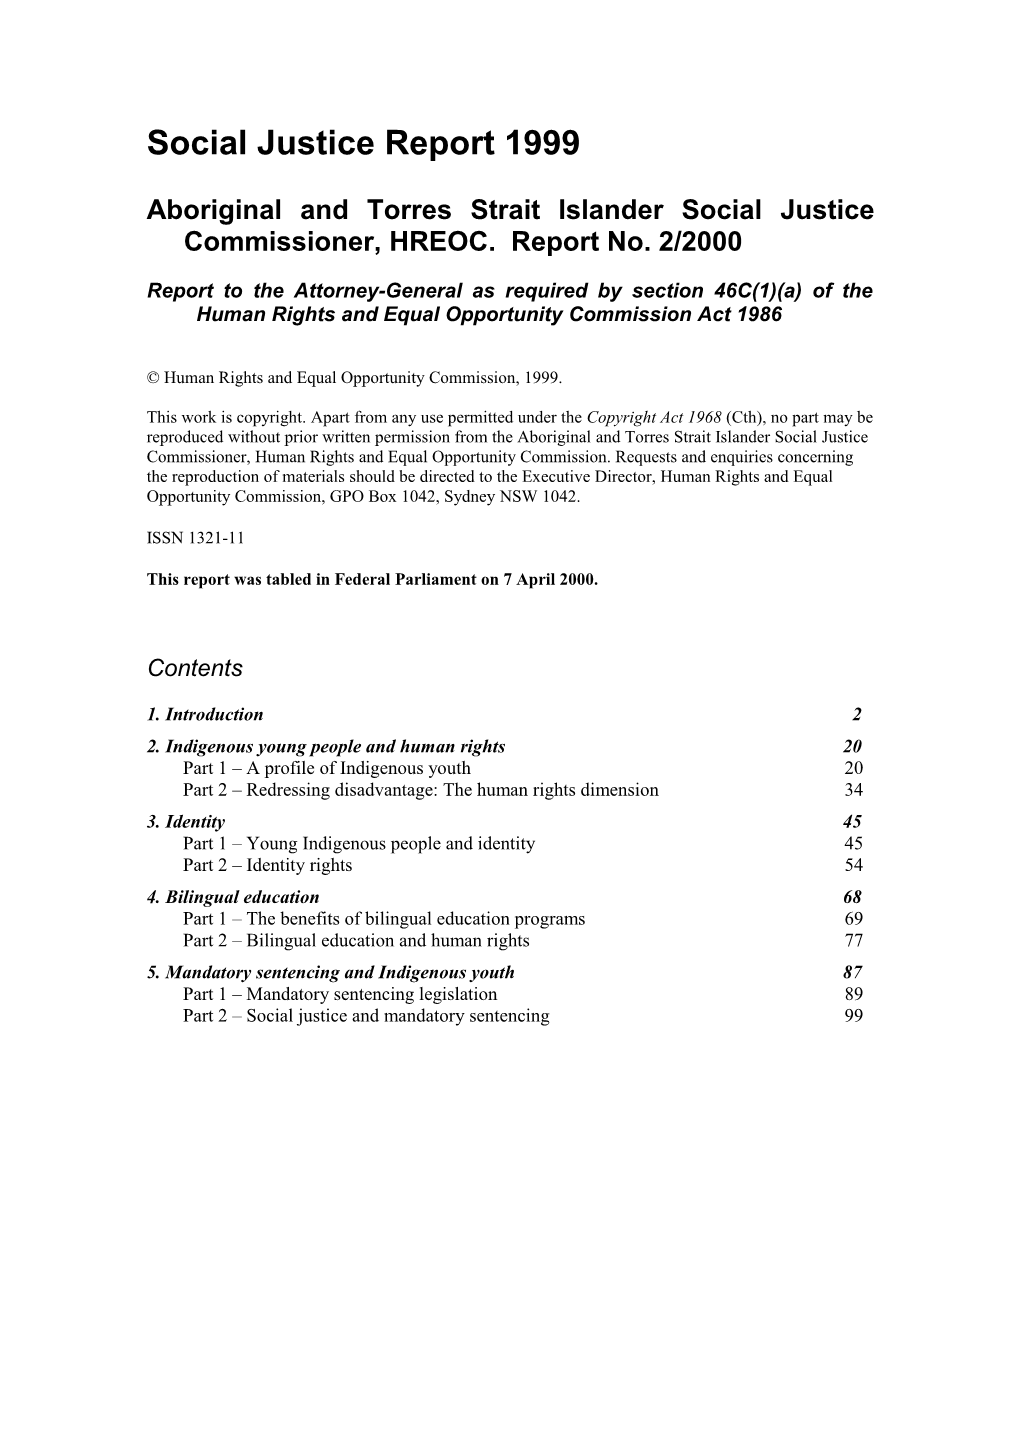 Aboriginal and Torres Strait Islander Social Justice Commissioner, HREOC. Report No. 2/2000